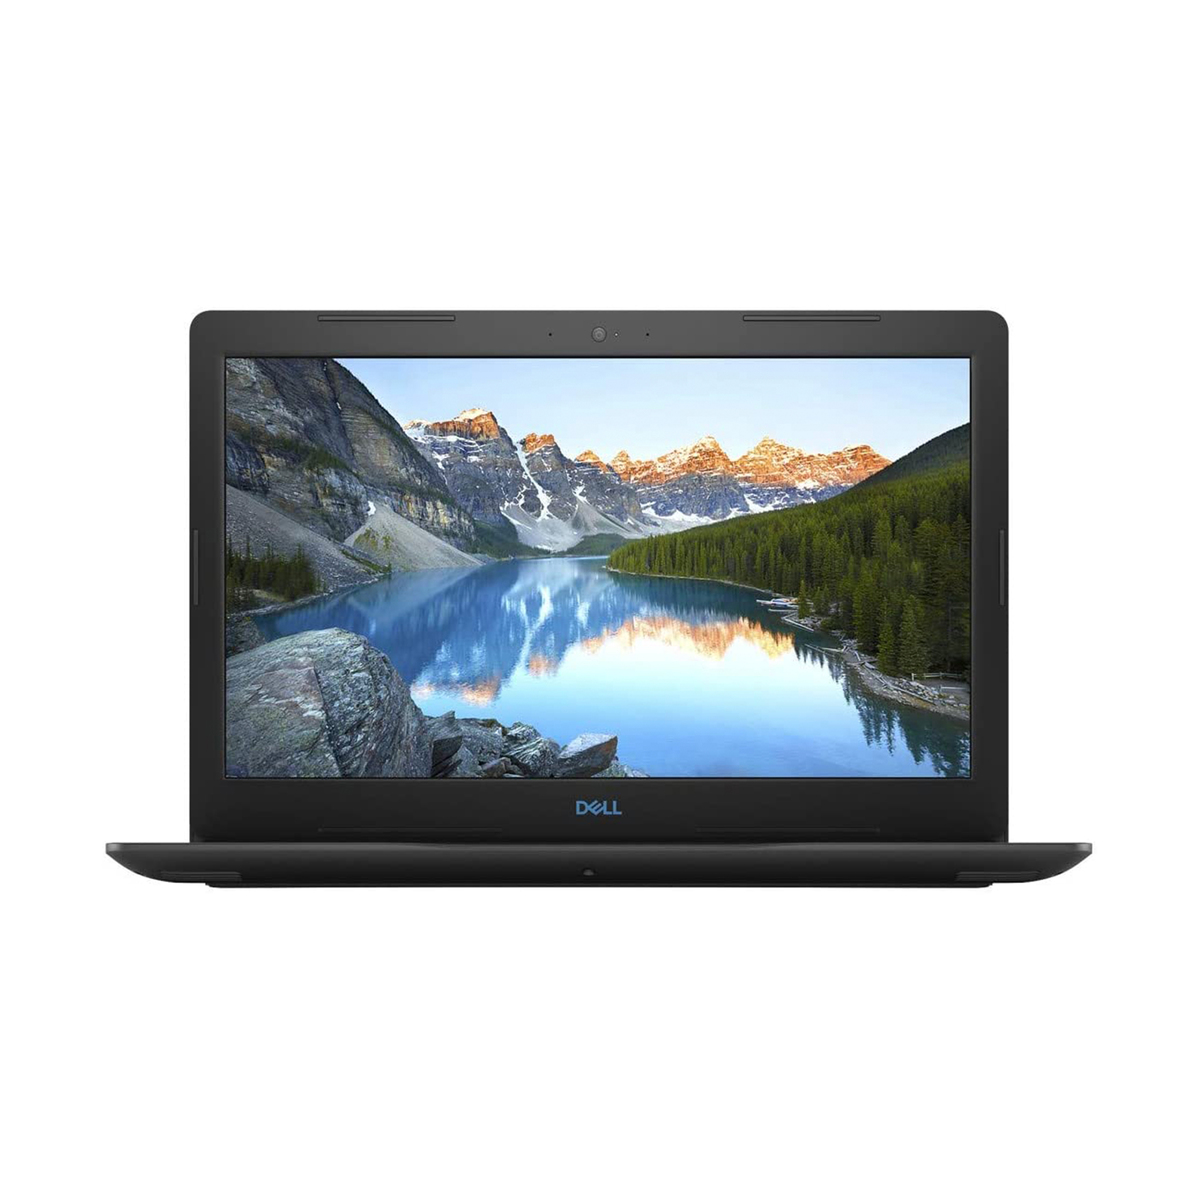 Dell G3 15(G3-1289-BLK)Gaming Laptop Core i7 ,8GB RAM, 1TB HDD +128GB SSD,NVIDIA GeForce GTX 1050 with 3GB GDDR5,Windos10,15.6inch FHD Black